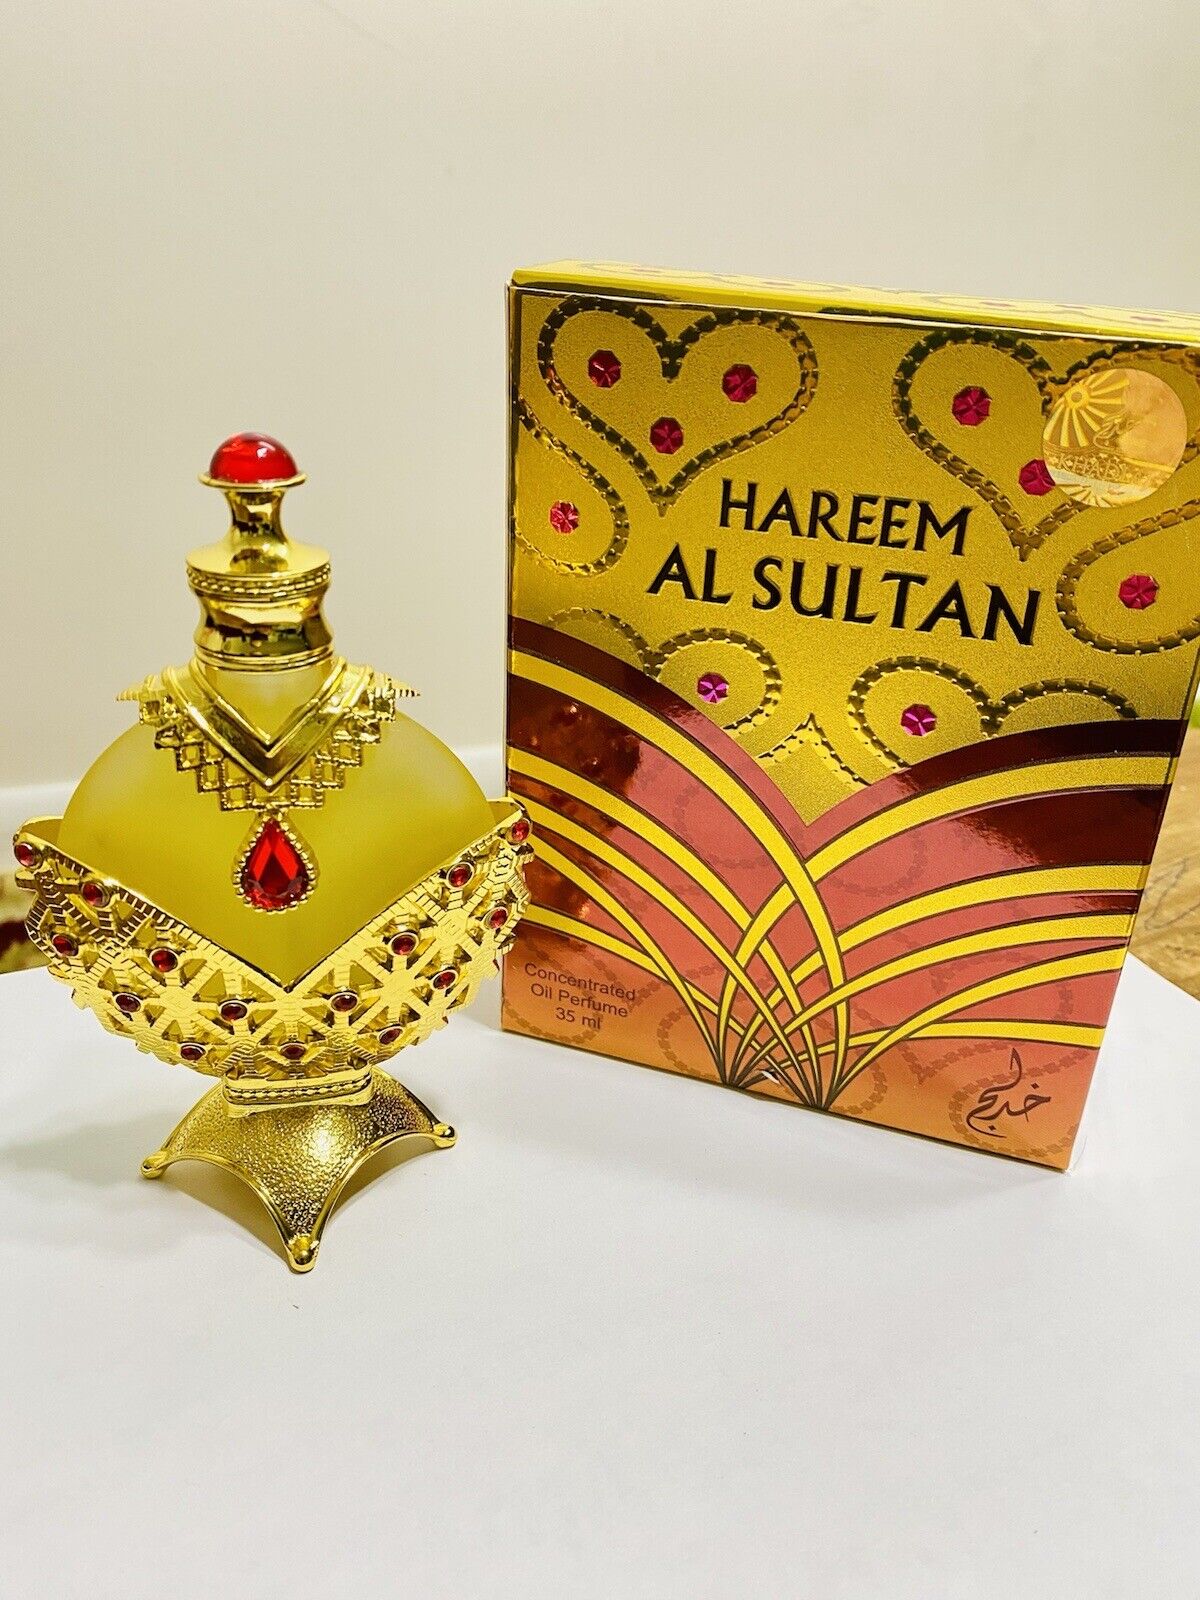 Hareem Al Sultan Gold Perfume Oil - 35 ML By Khadlaj